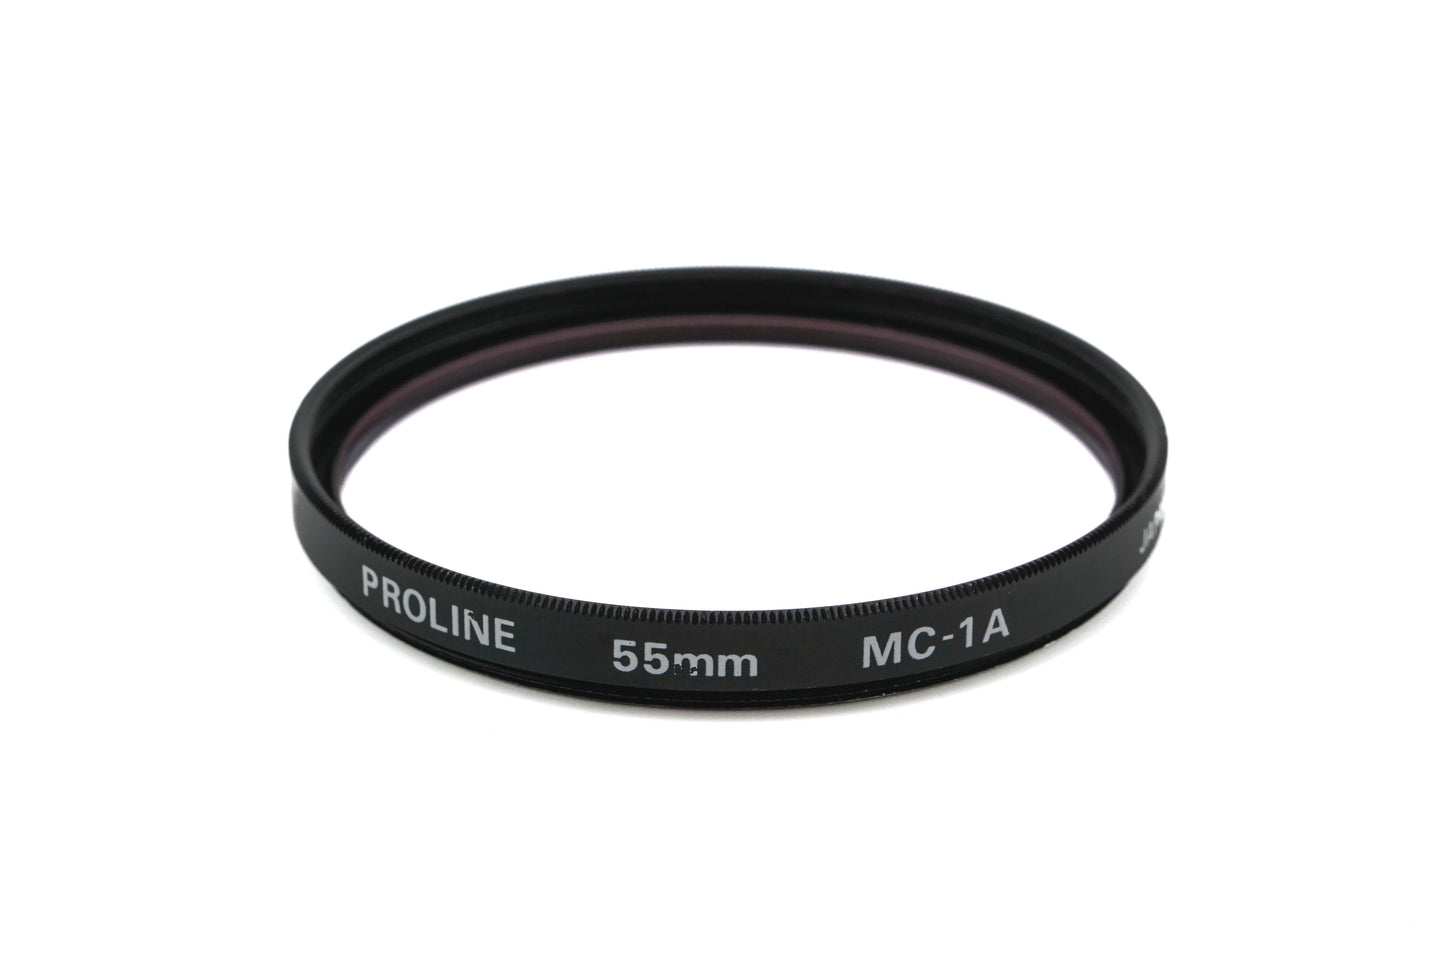 Proline 55mm Skylight Filter MC-1A